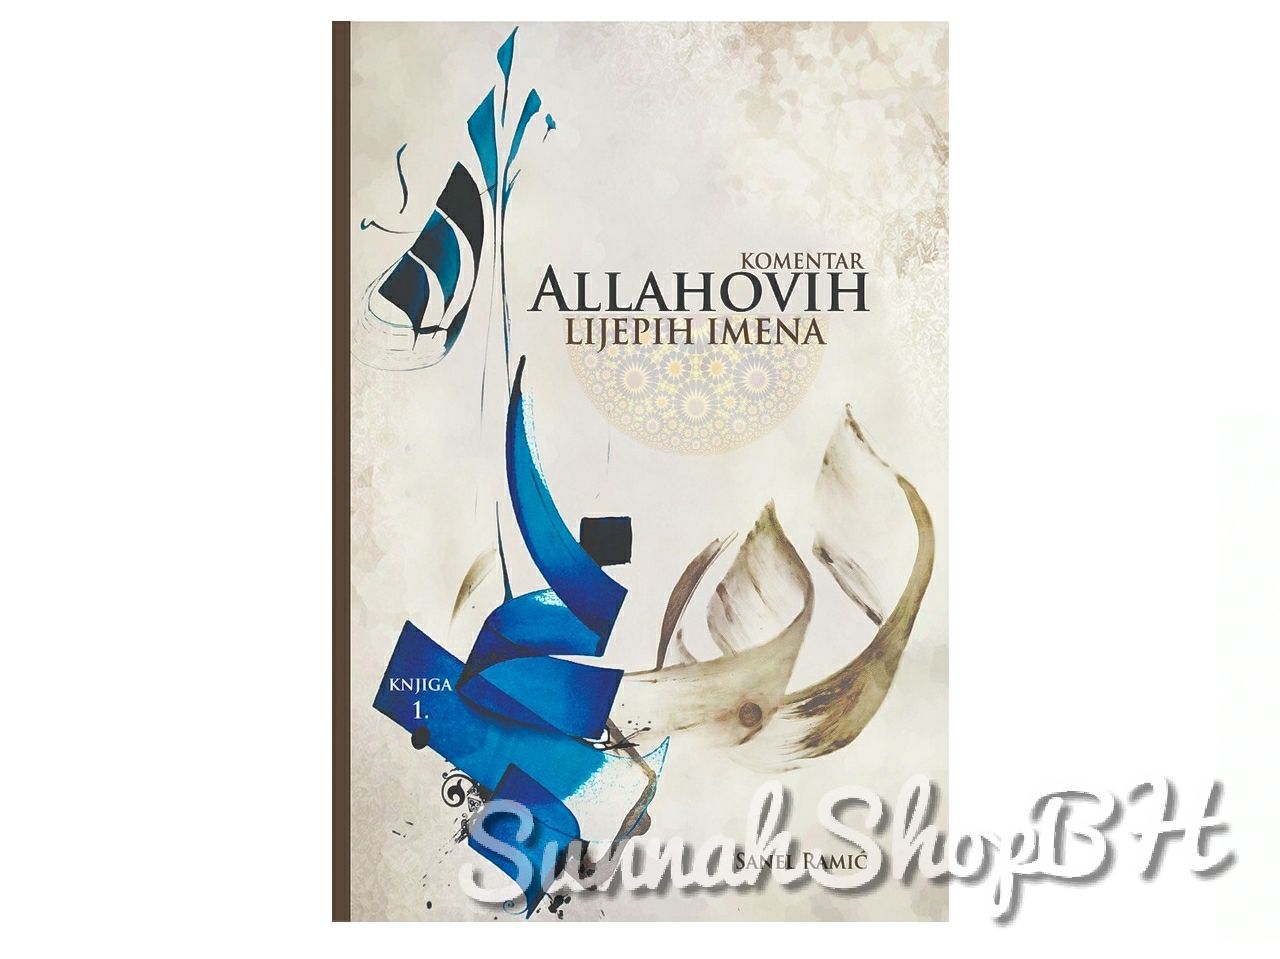 Islamske knjige - Komentar Allahovih lijepih imena - knjiga 1